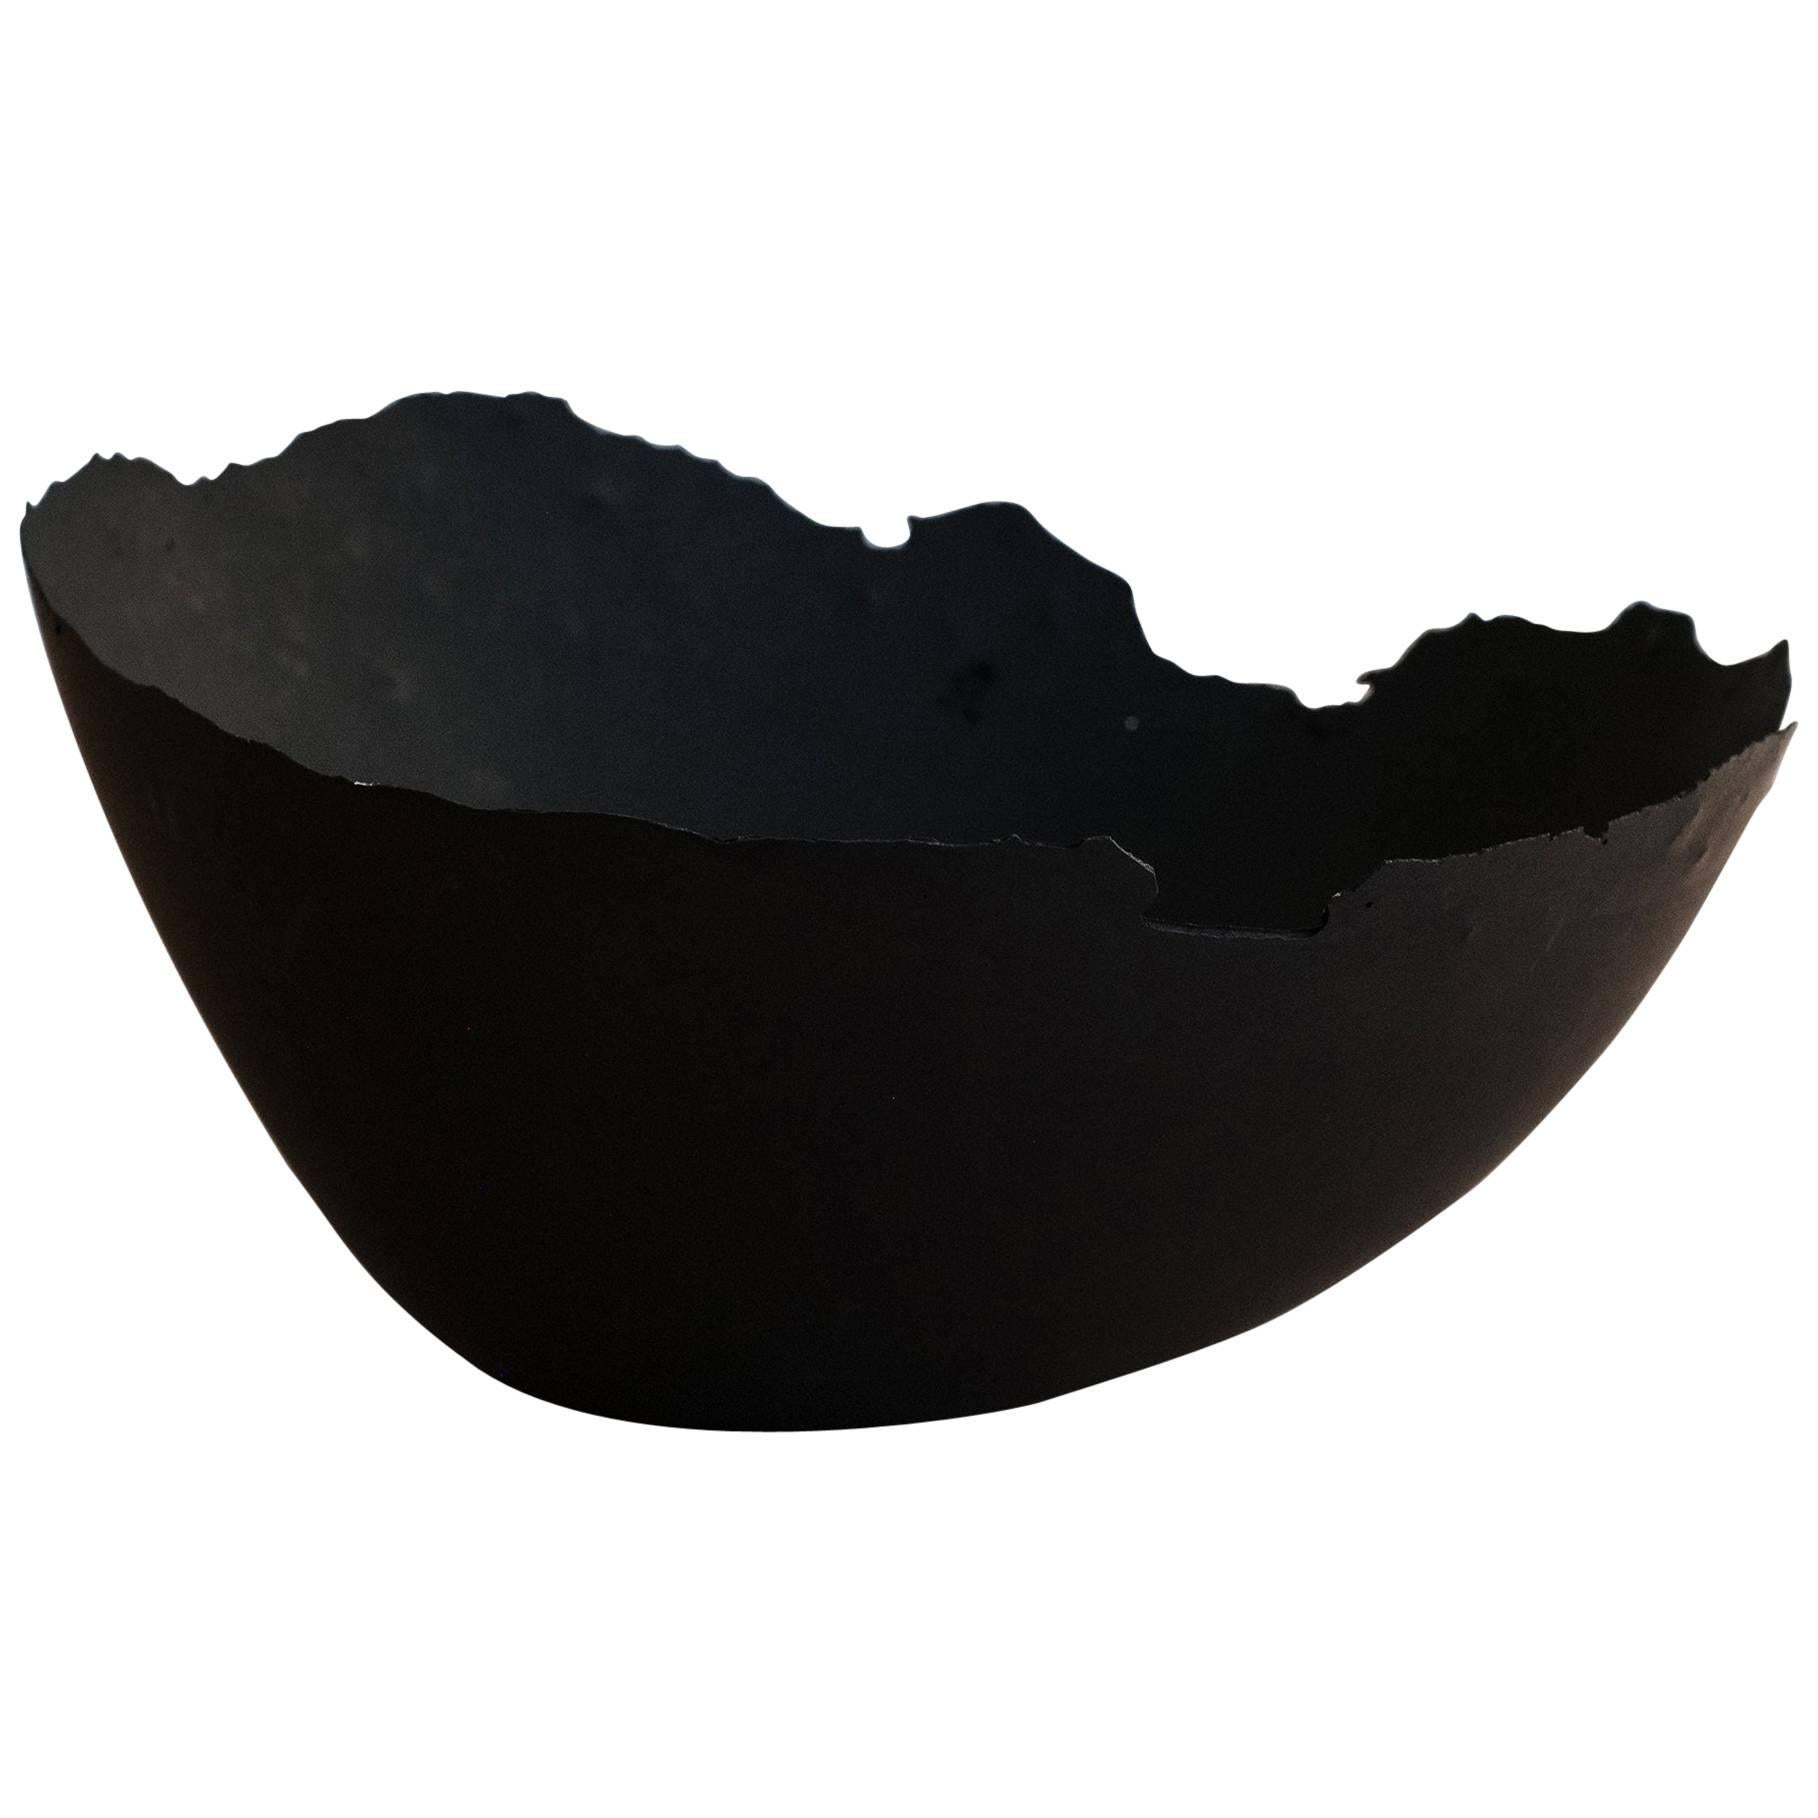 Handmade Cast Concrete Bowl in Black by UMÉ Studio For Sale